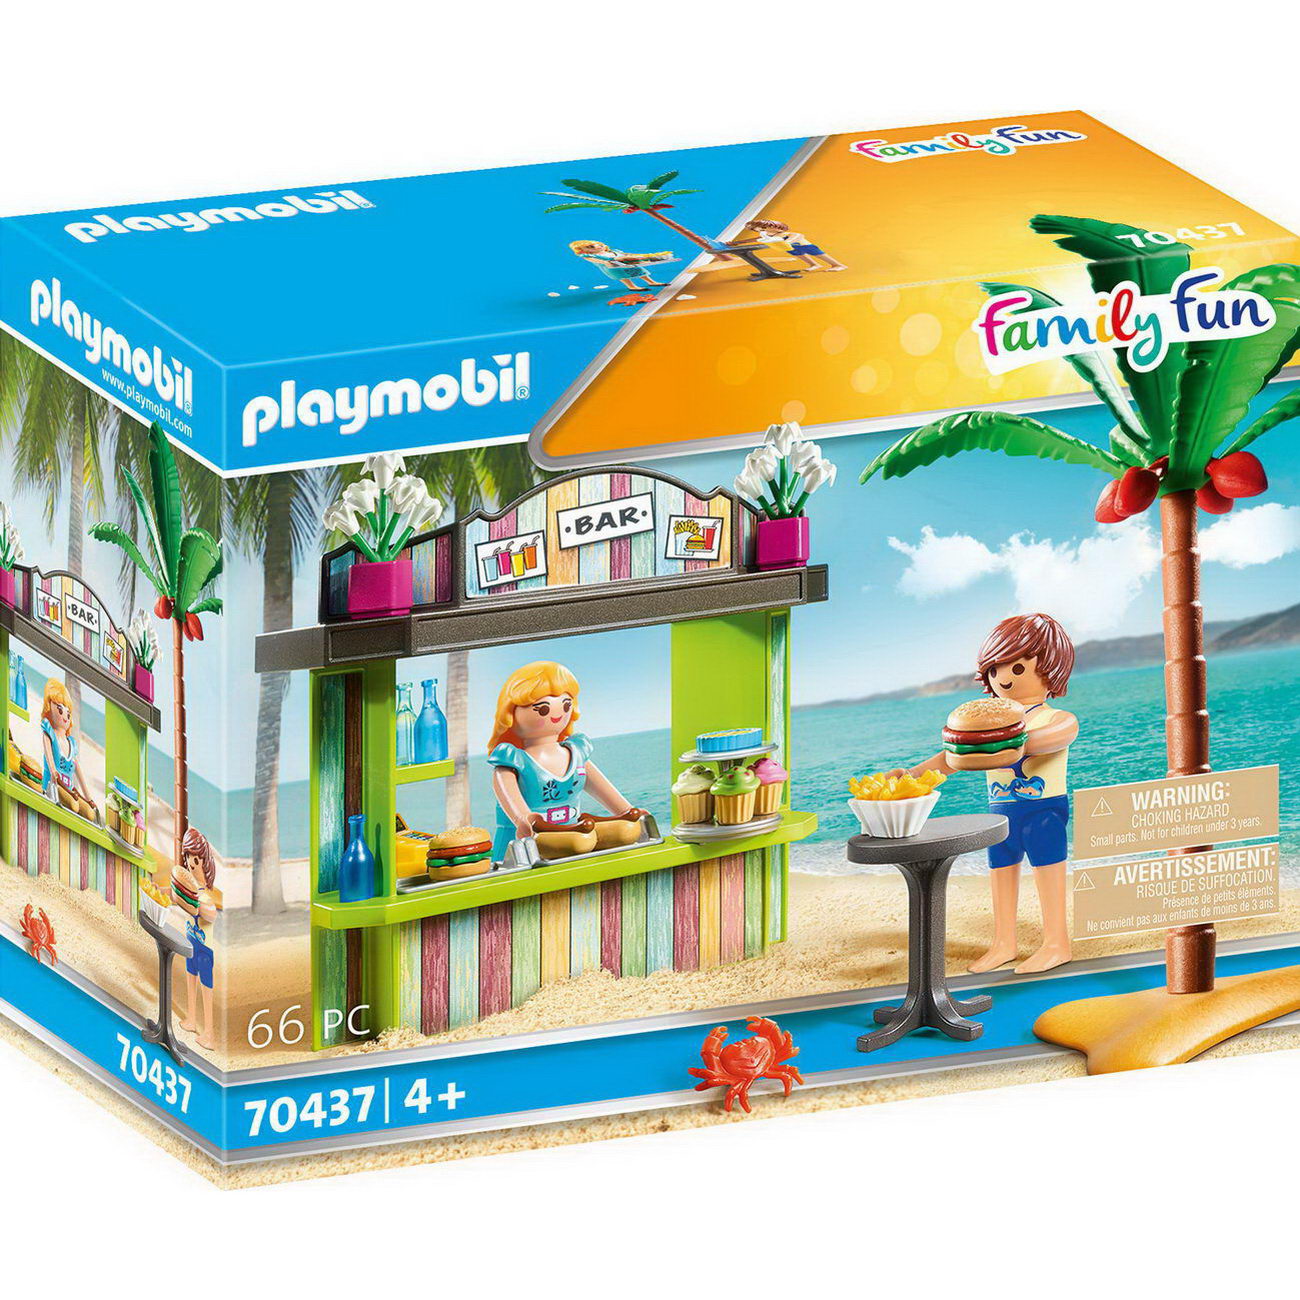 Playmobil 70437 - Strandkiosk - Family Fun